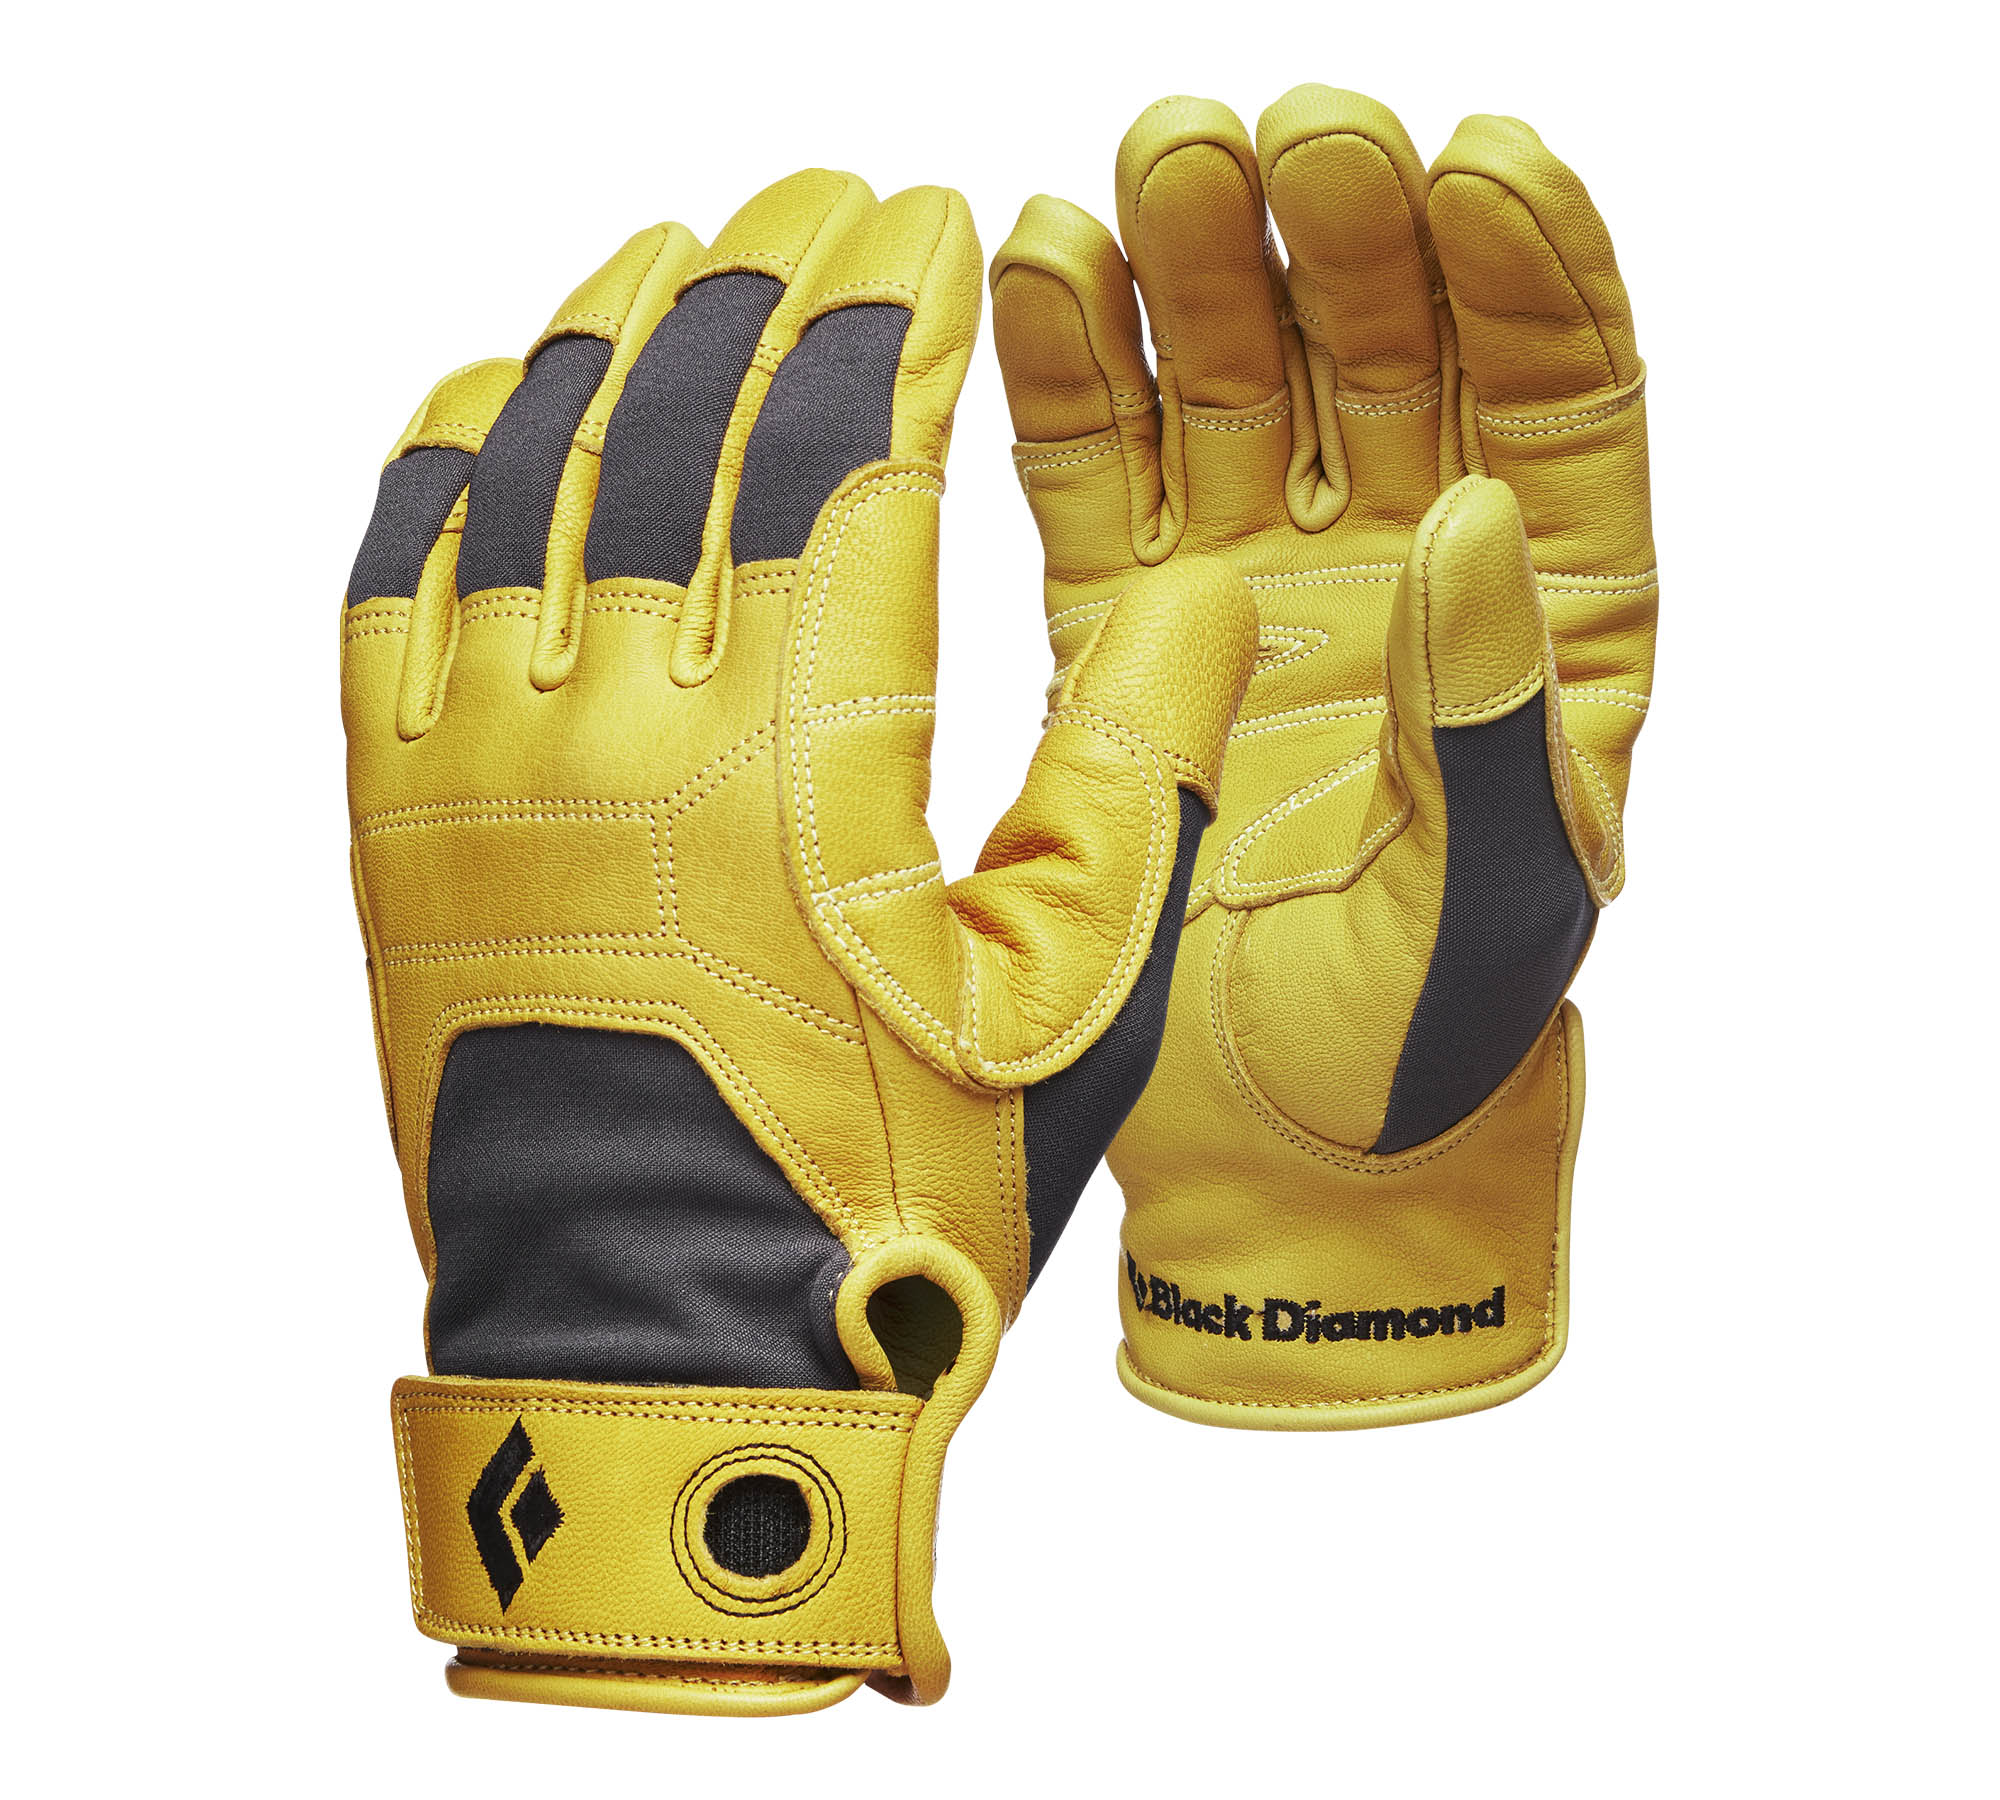 Black Diamond Transition Gloves - Climbing gloves